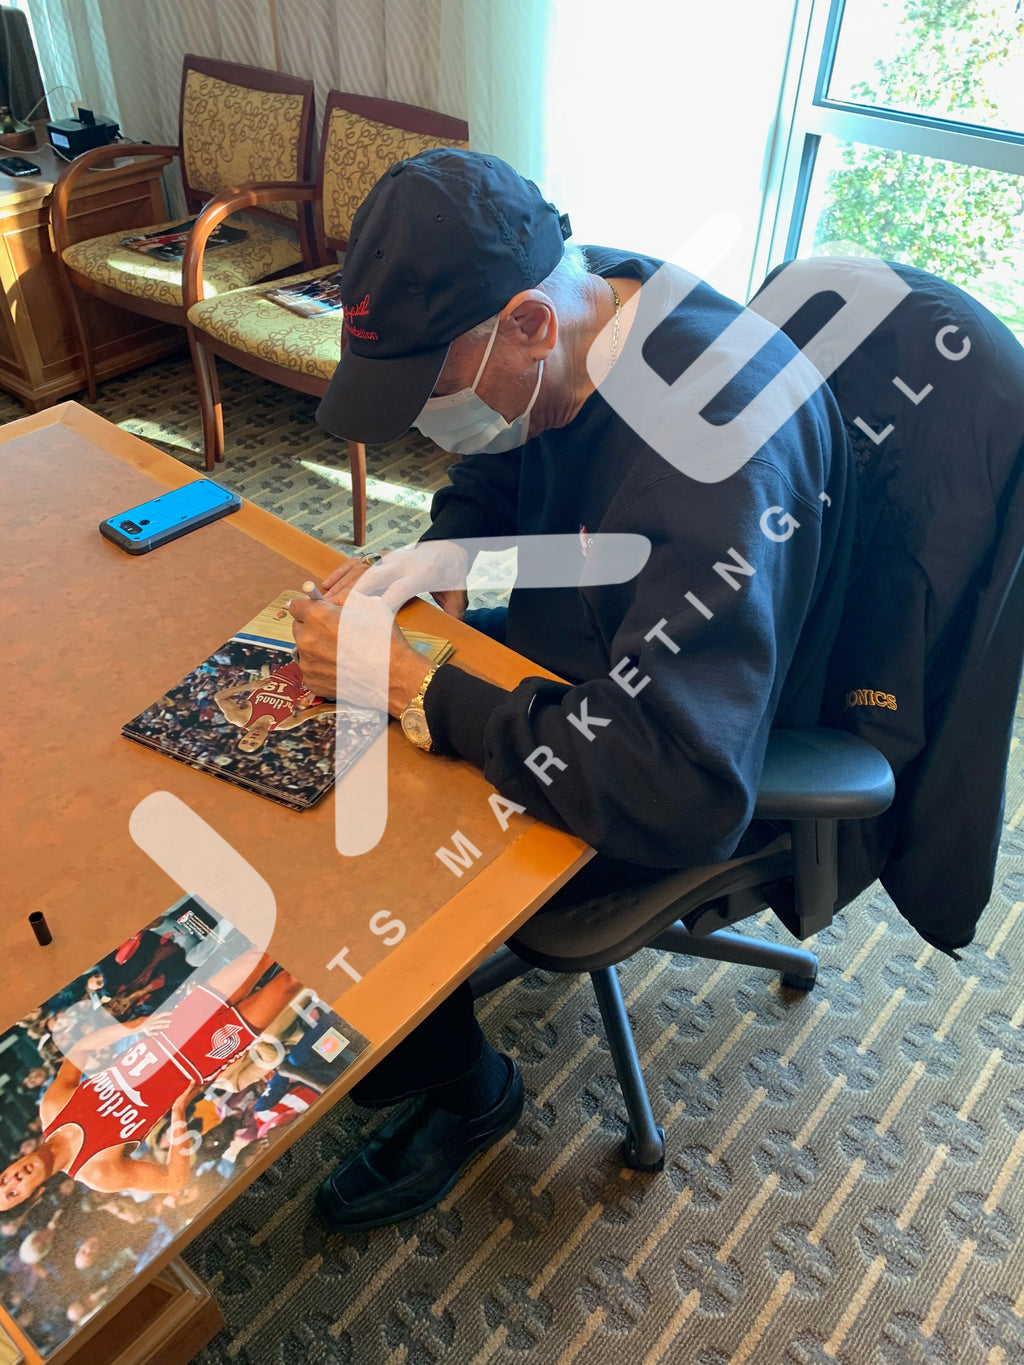 Lenny Wilkens autographed signed 8x10 photo NBA Port Land Trail Blazers JSA COA - JAG Sports Marketing